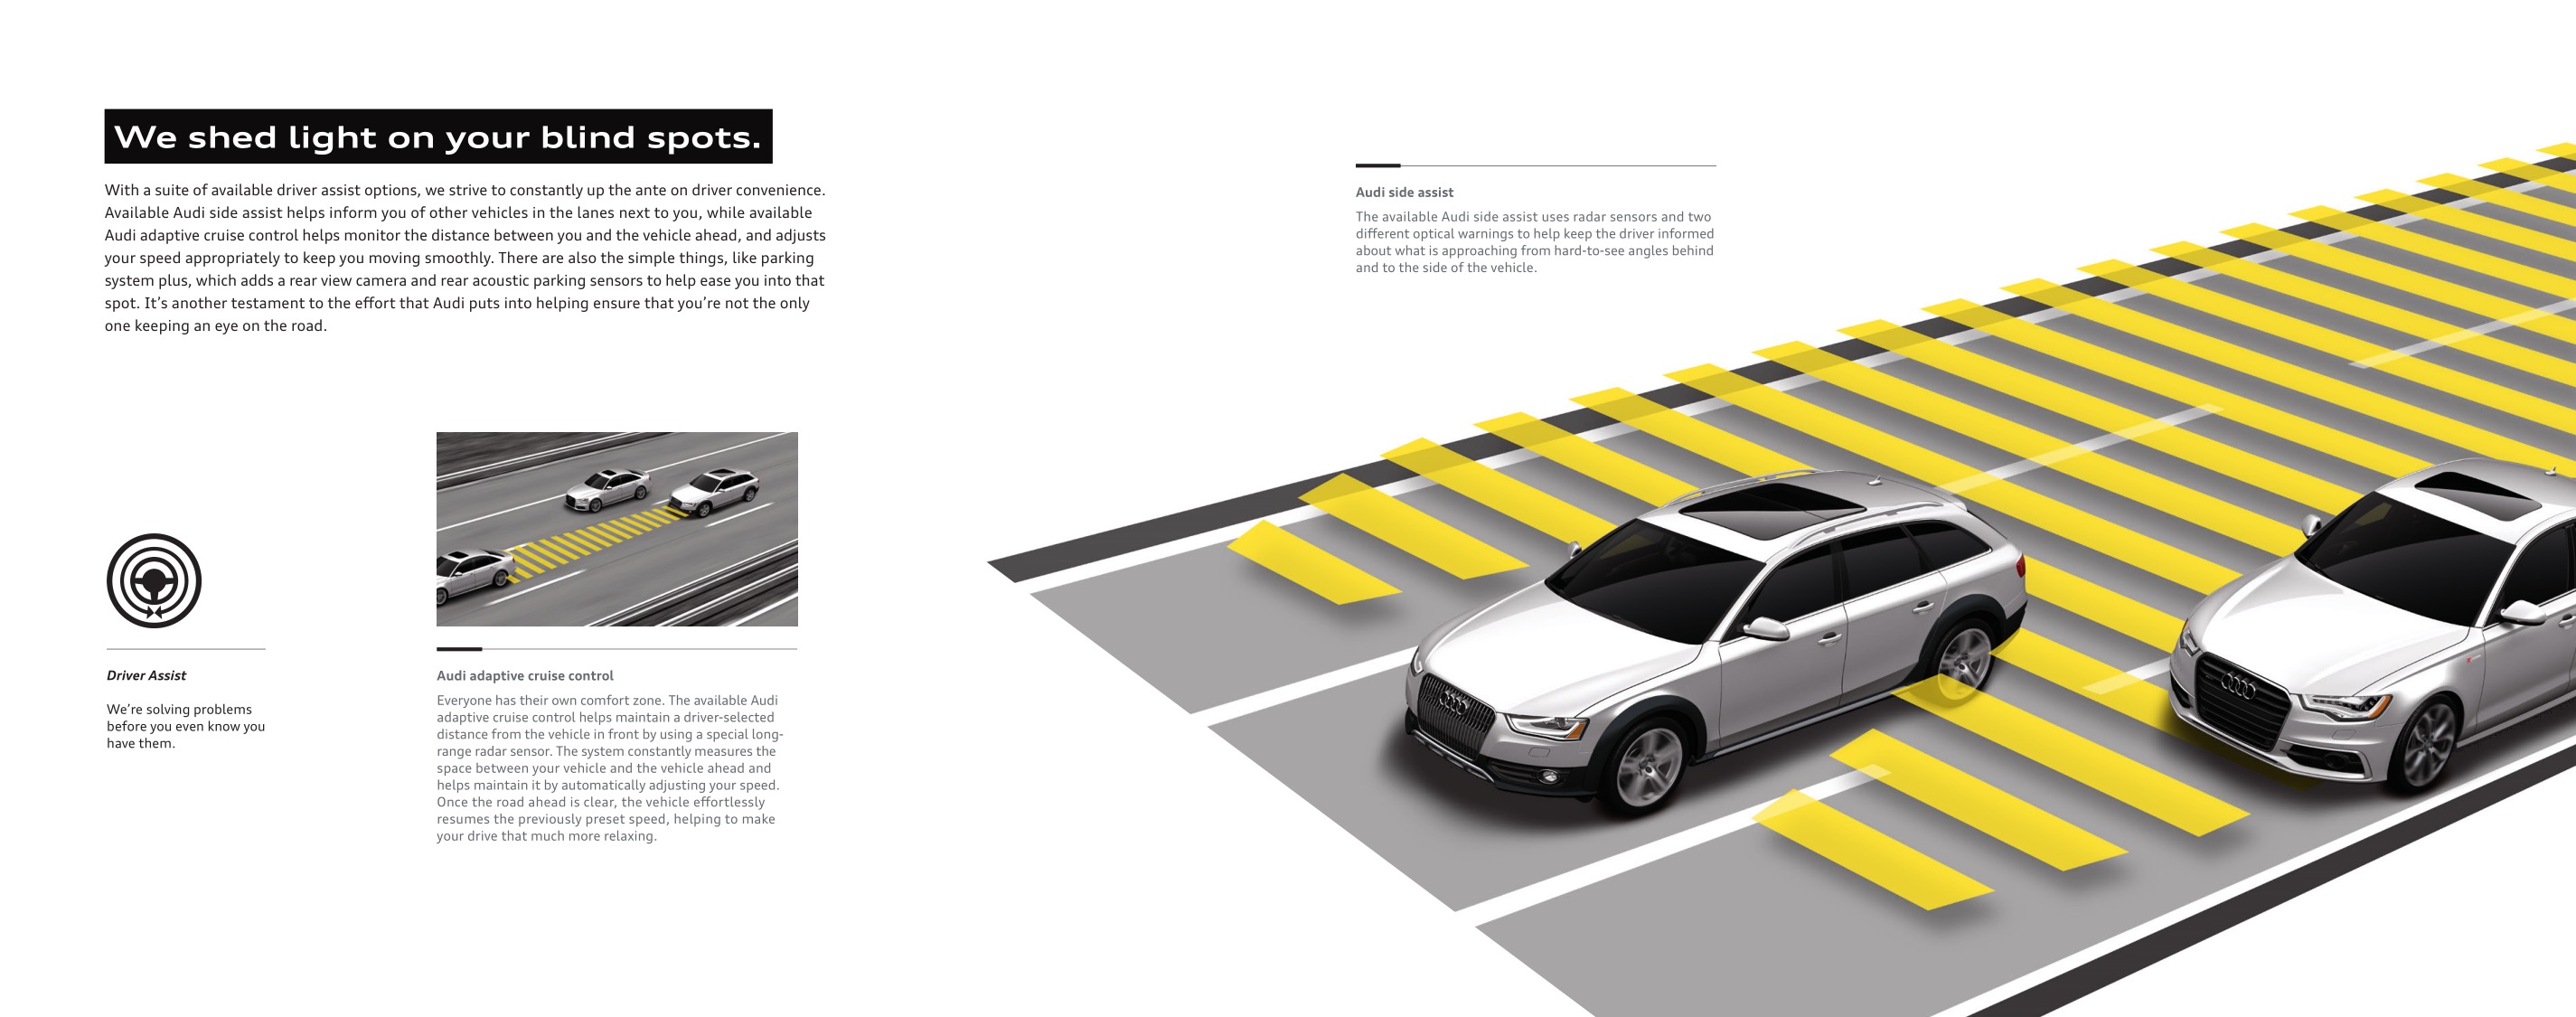 2014 Audi Allroad Brochure Page 10